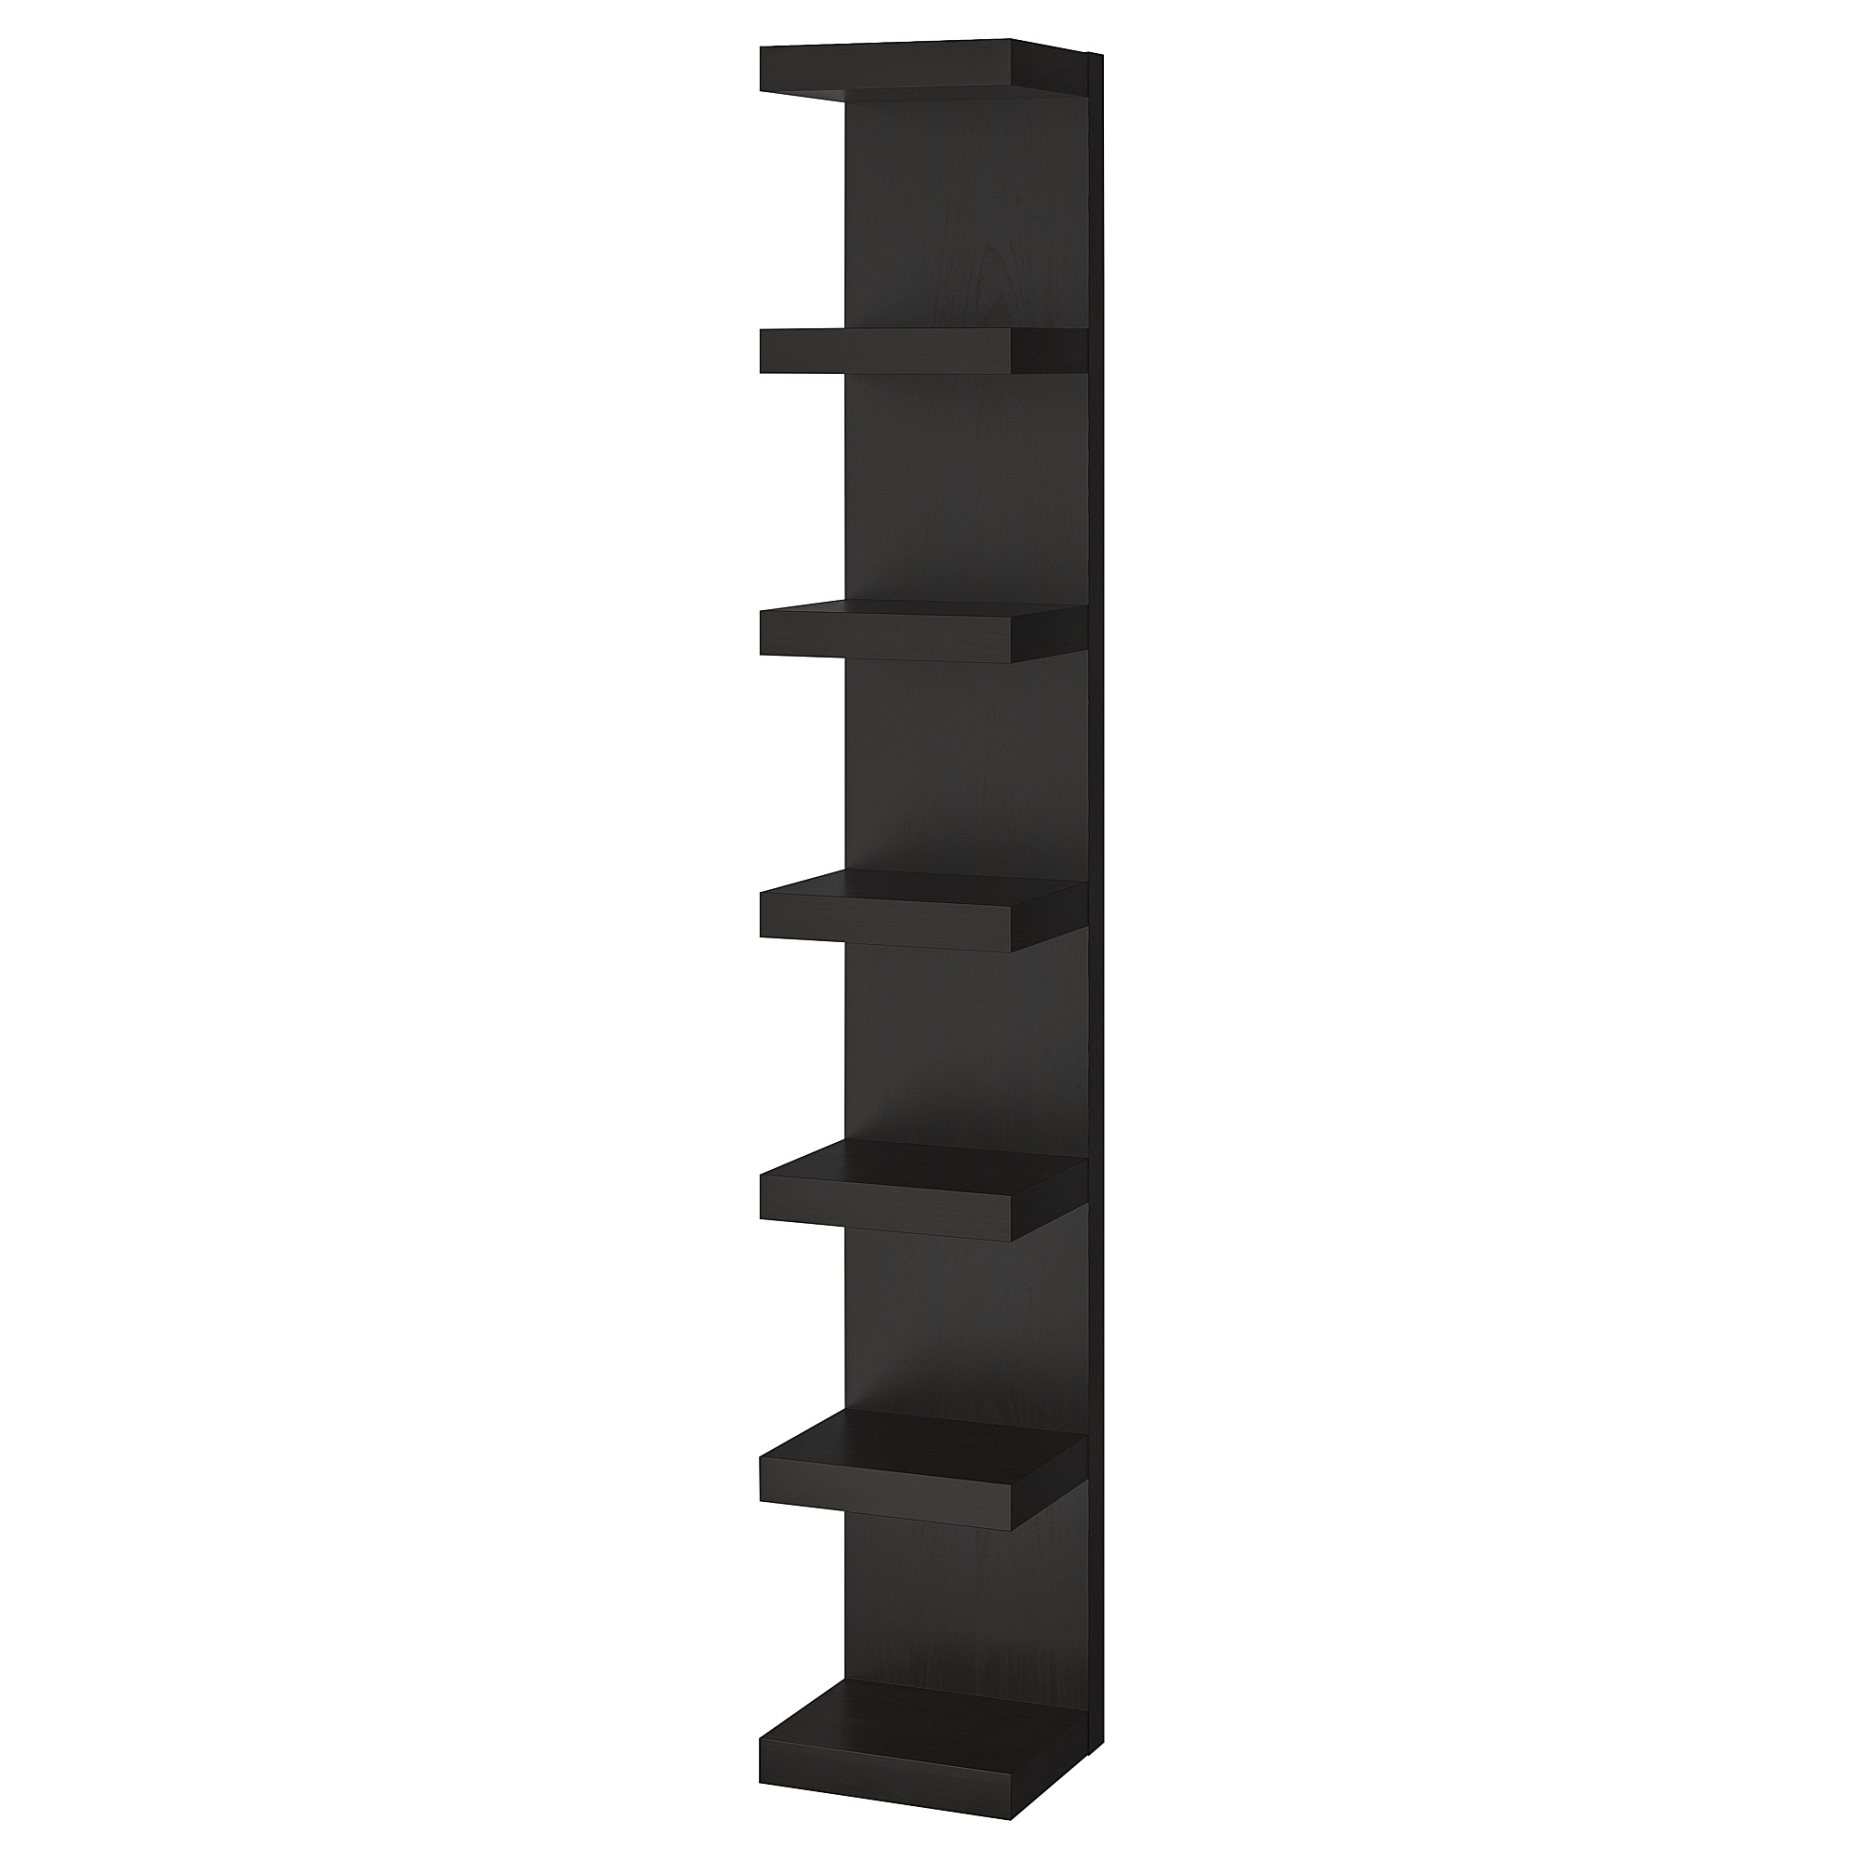 LACK, wall shelf unit, 804.305.91